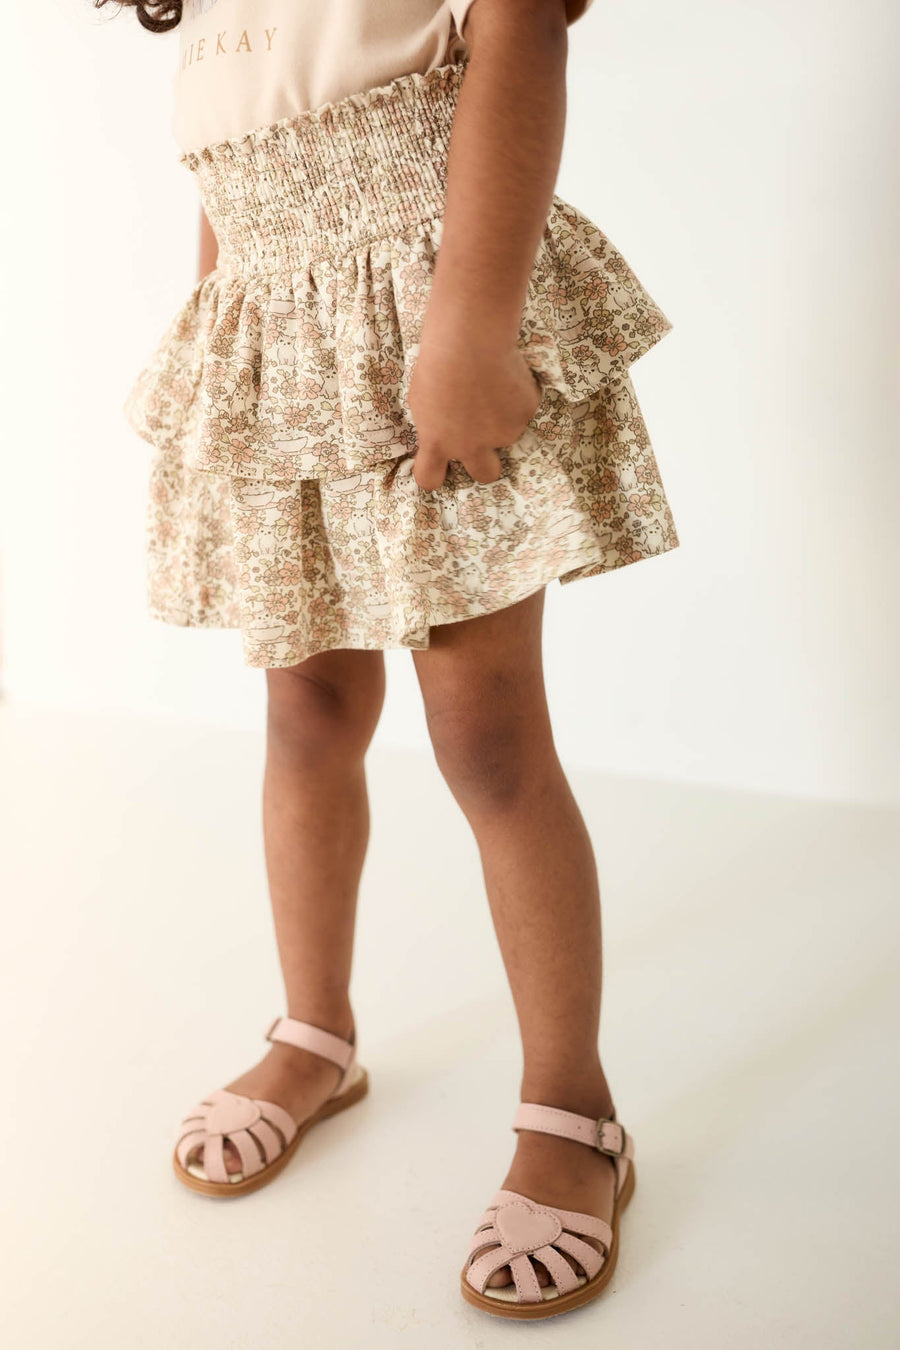 Organic Cotton Ruby Skirt - Kitty Chloe Childrens Skirt from Jamie Kay USA